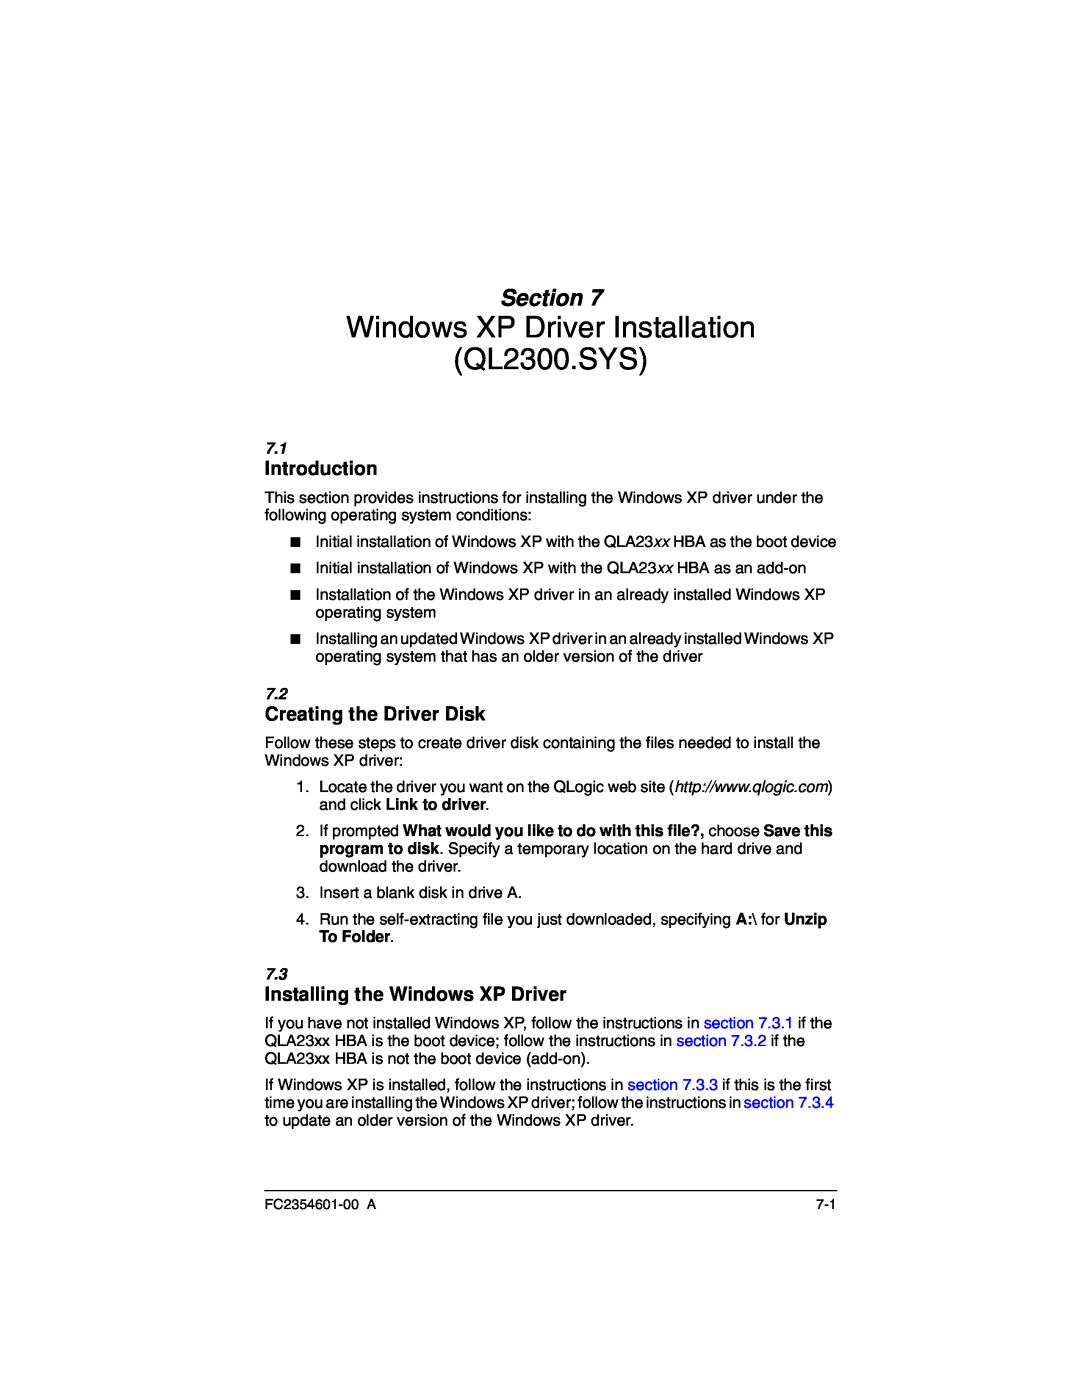 Q-Logic manual Windows XP Driver Installation QL2300.SYS, Installing the Windows XP Driver, Section, Introduction 